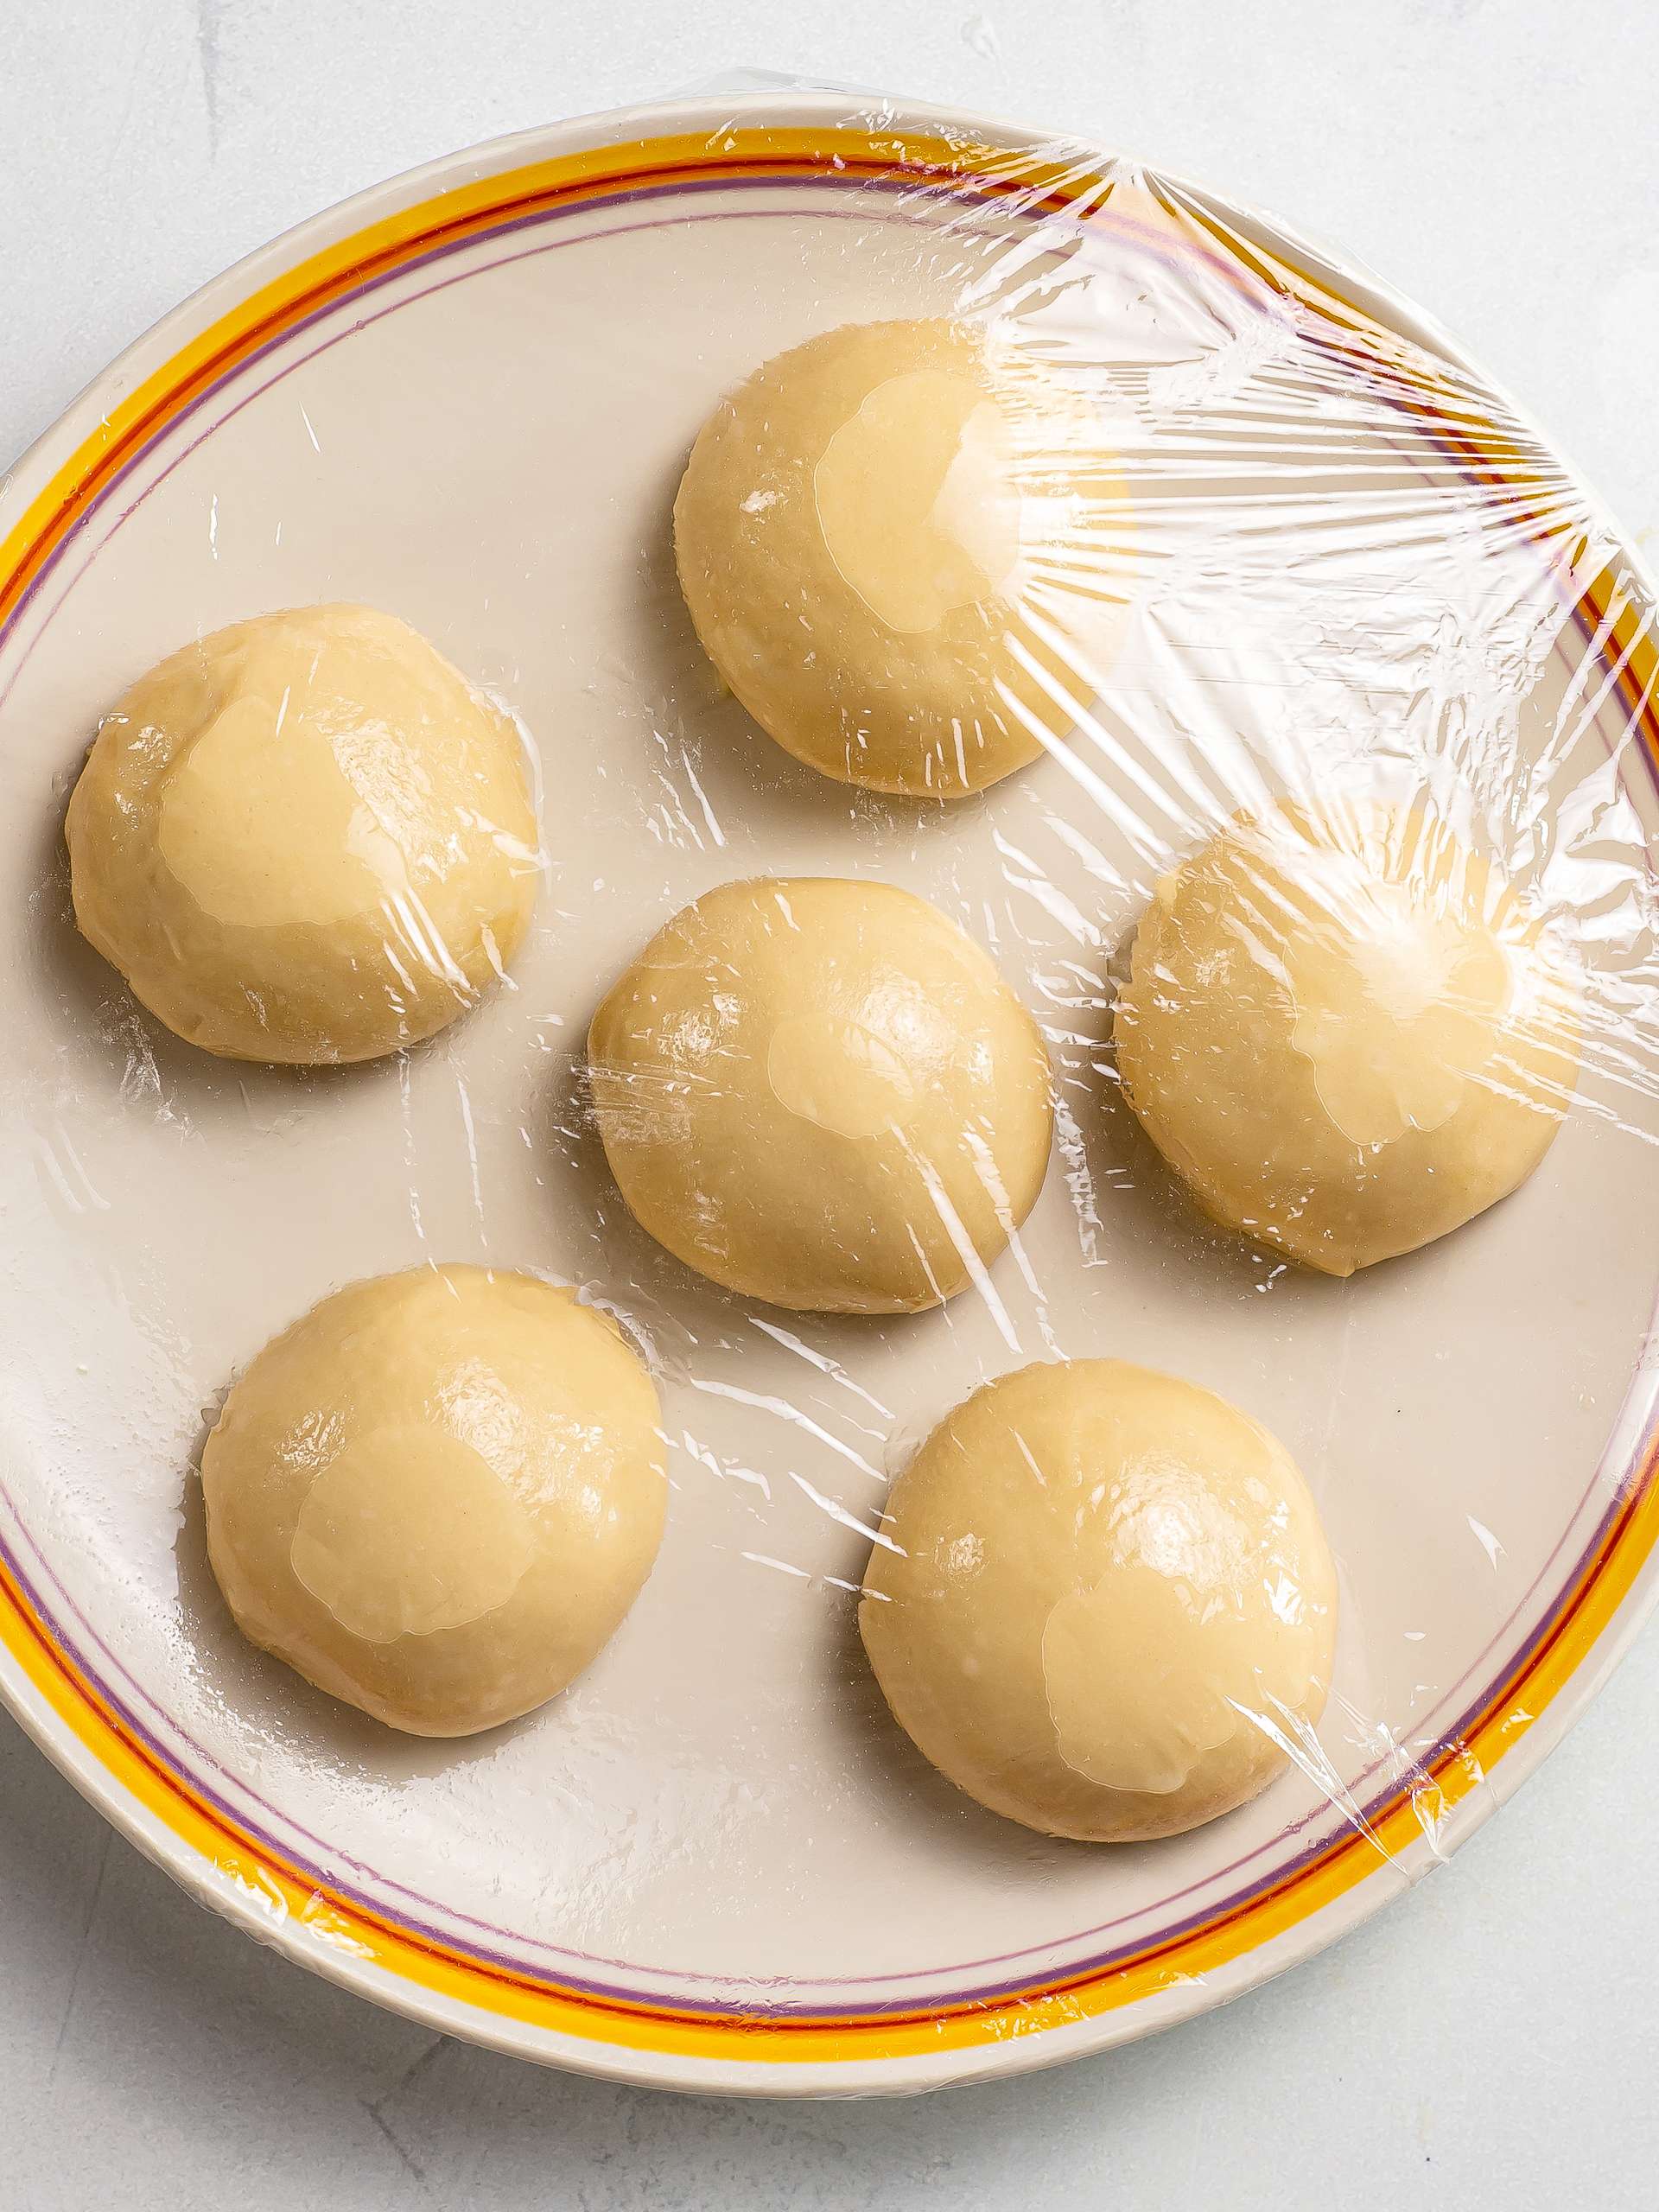 thai banana pancake dough balls resting on a plate